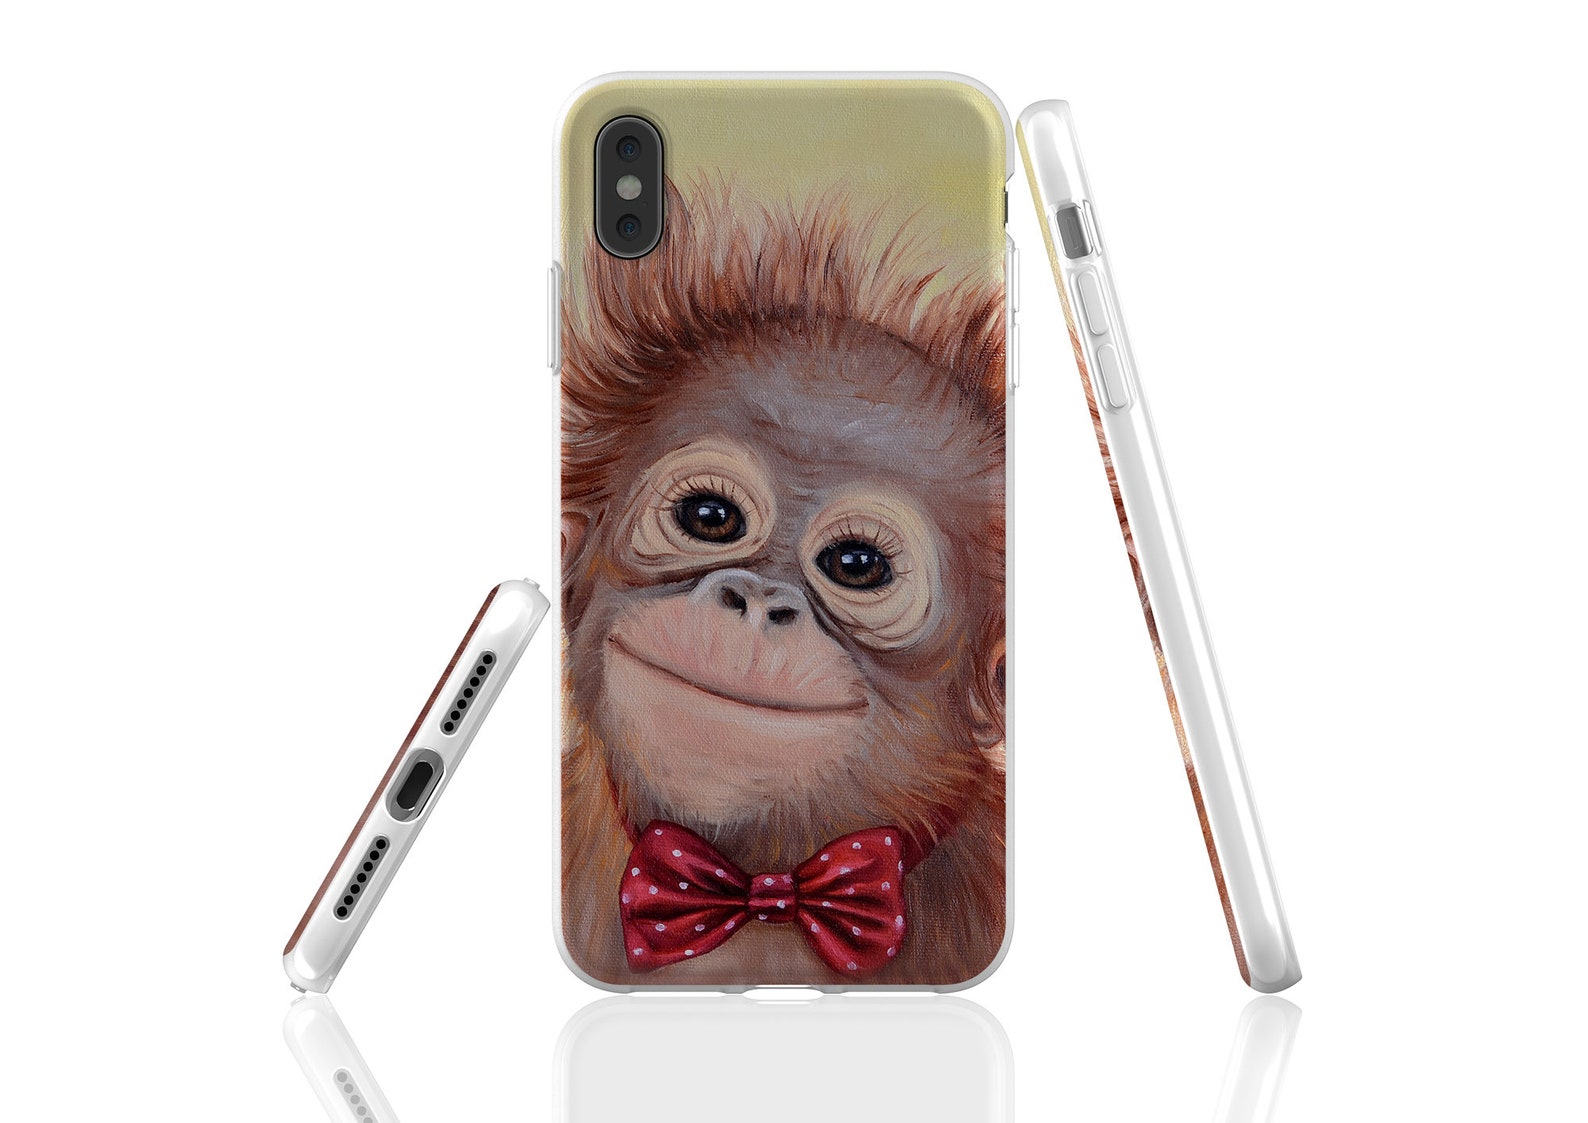 Monkey iphone remix. Обезьяна с айфоном. Внешка обезьян с айфонами. Aha Monke Phone. Toy Phone with animal contacts.